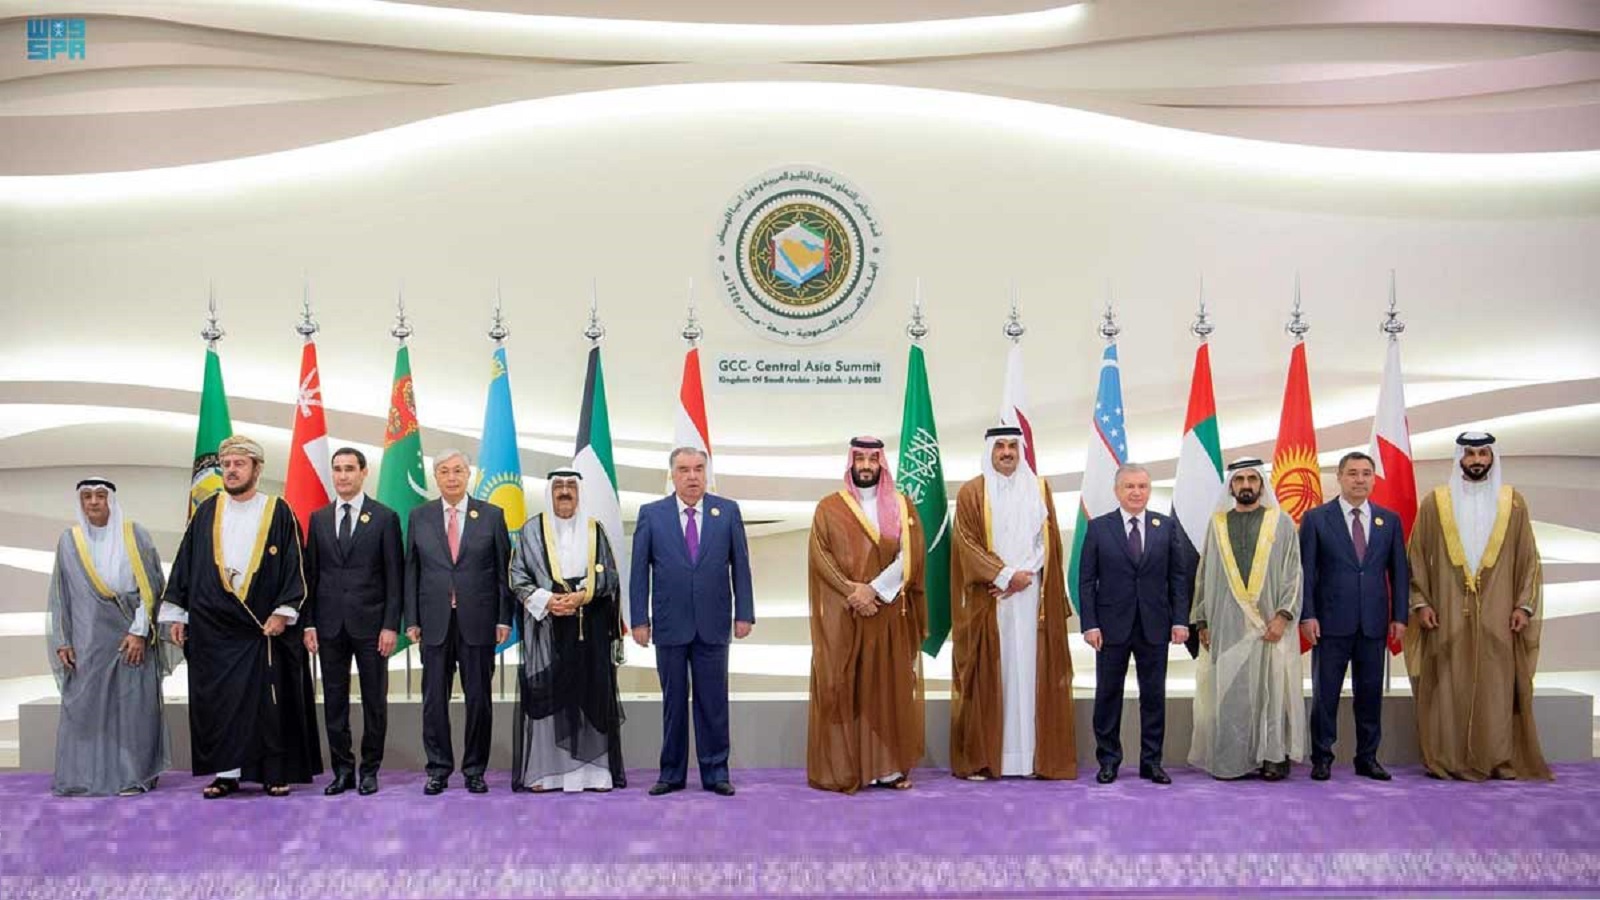 A Groundbreaking Gulf-Central Asian Summit